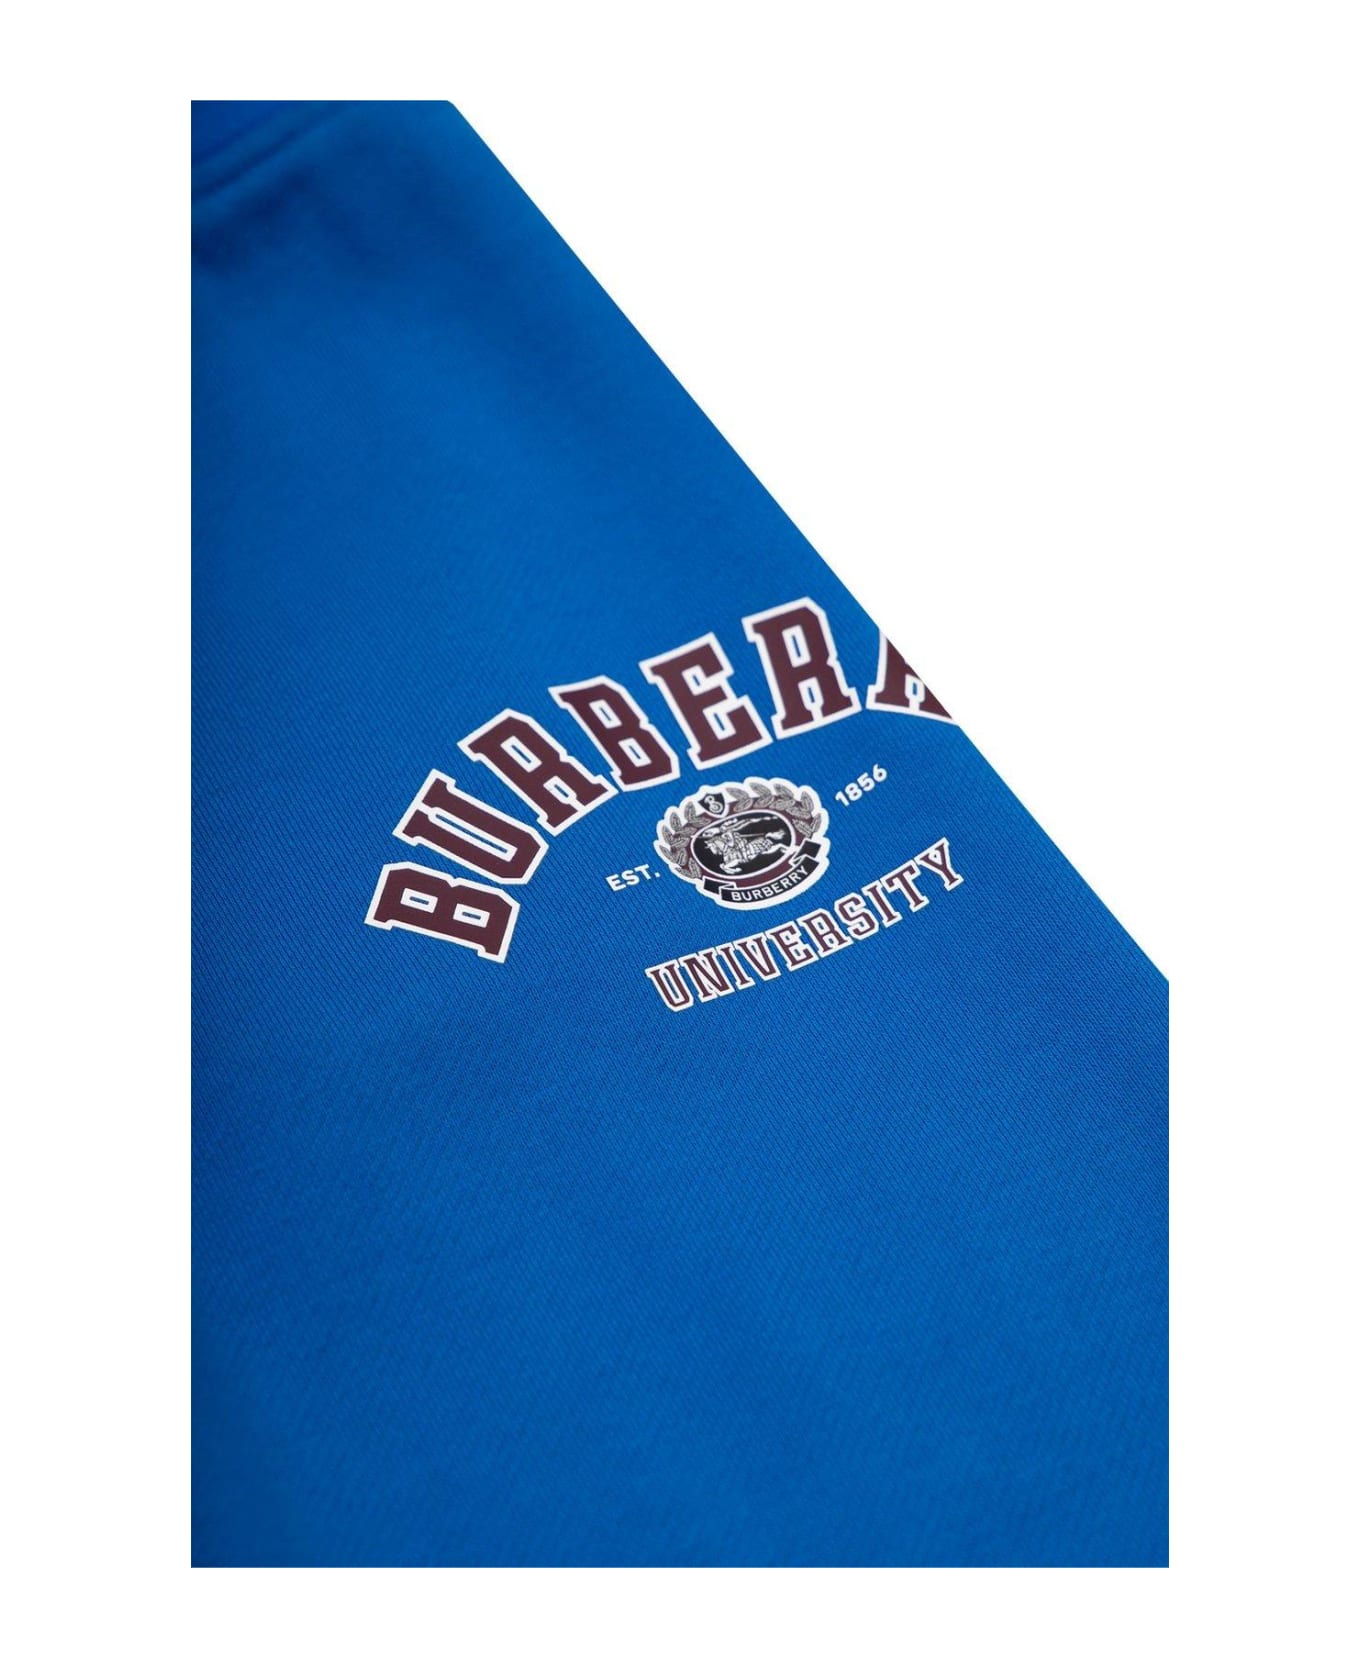 Burberry Logo Printed Sweatpants - BLUE